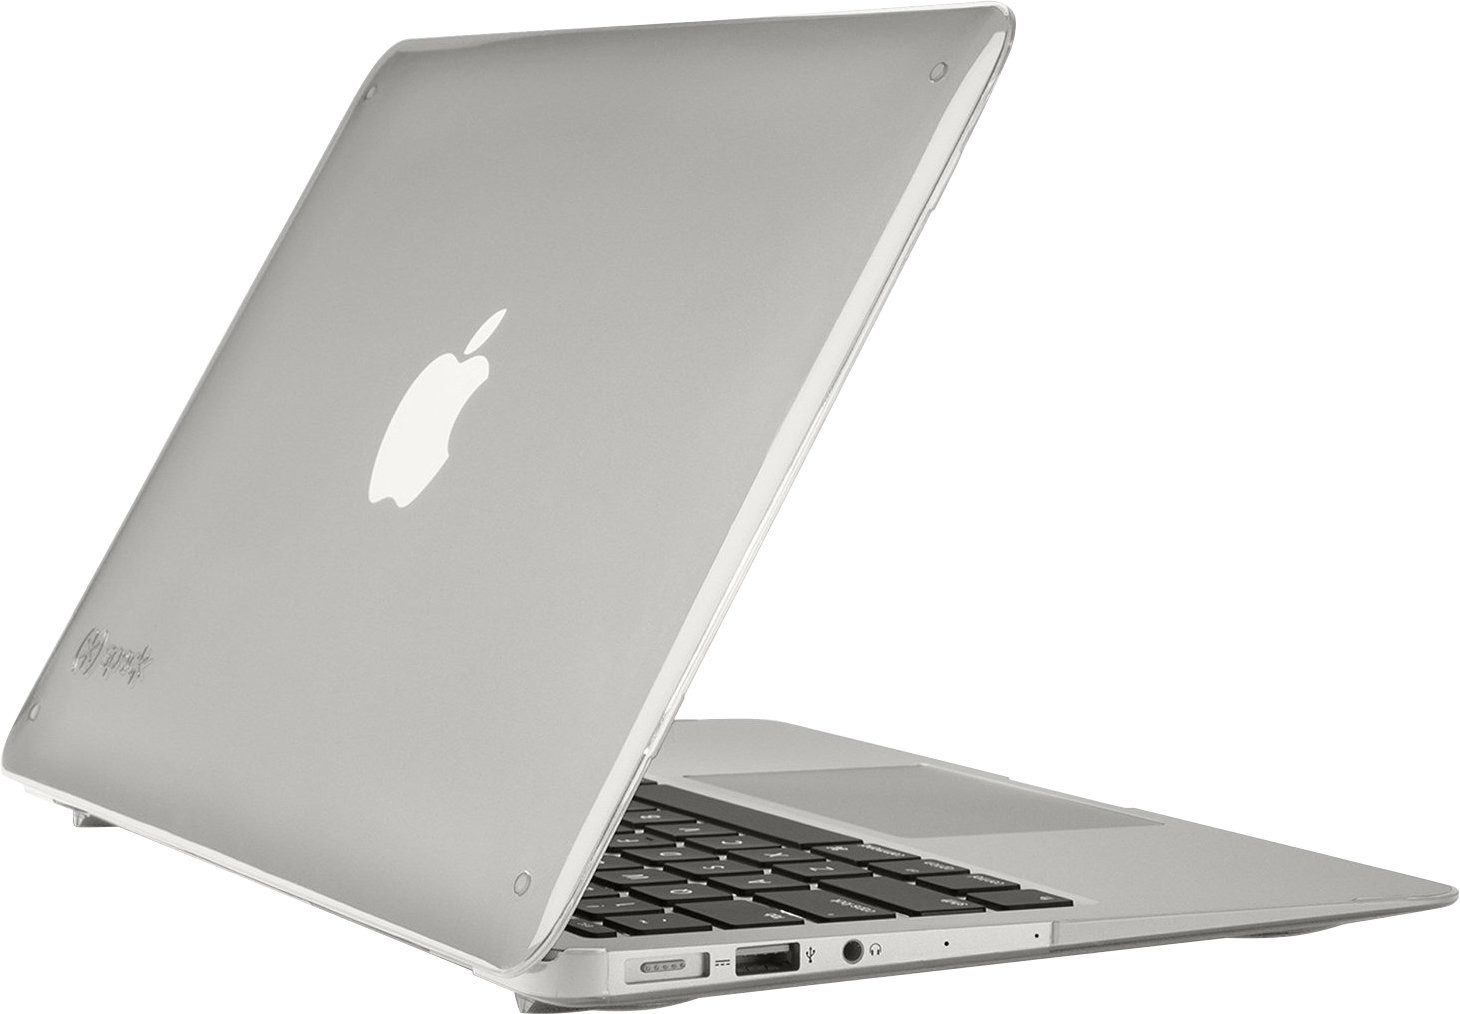 speck macbook case warranty claim